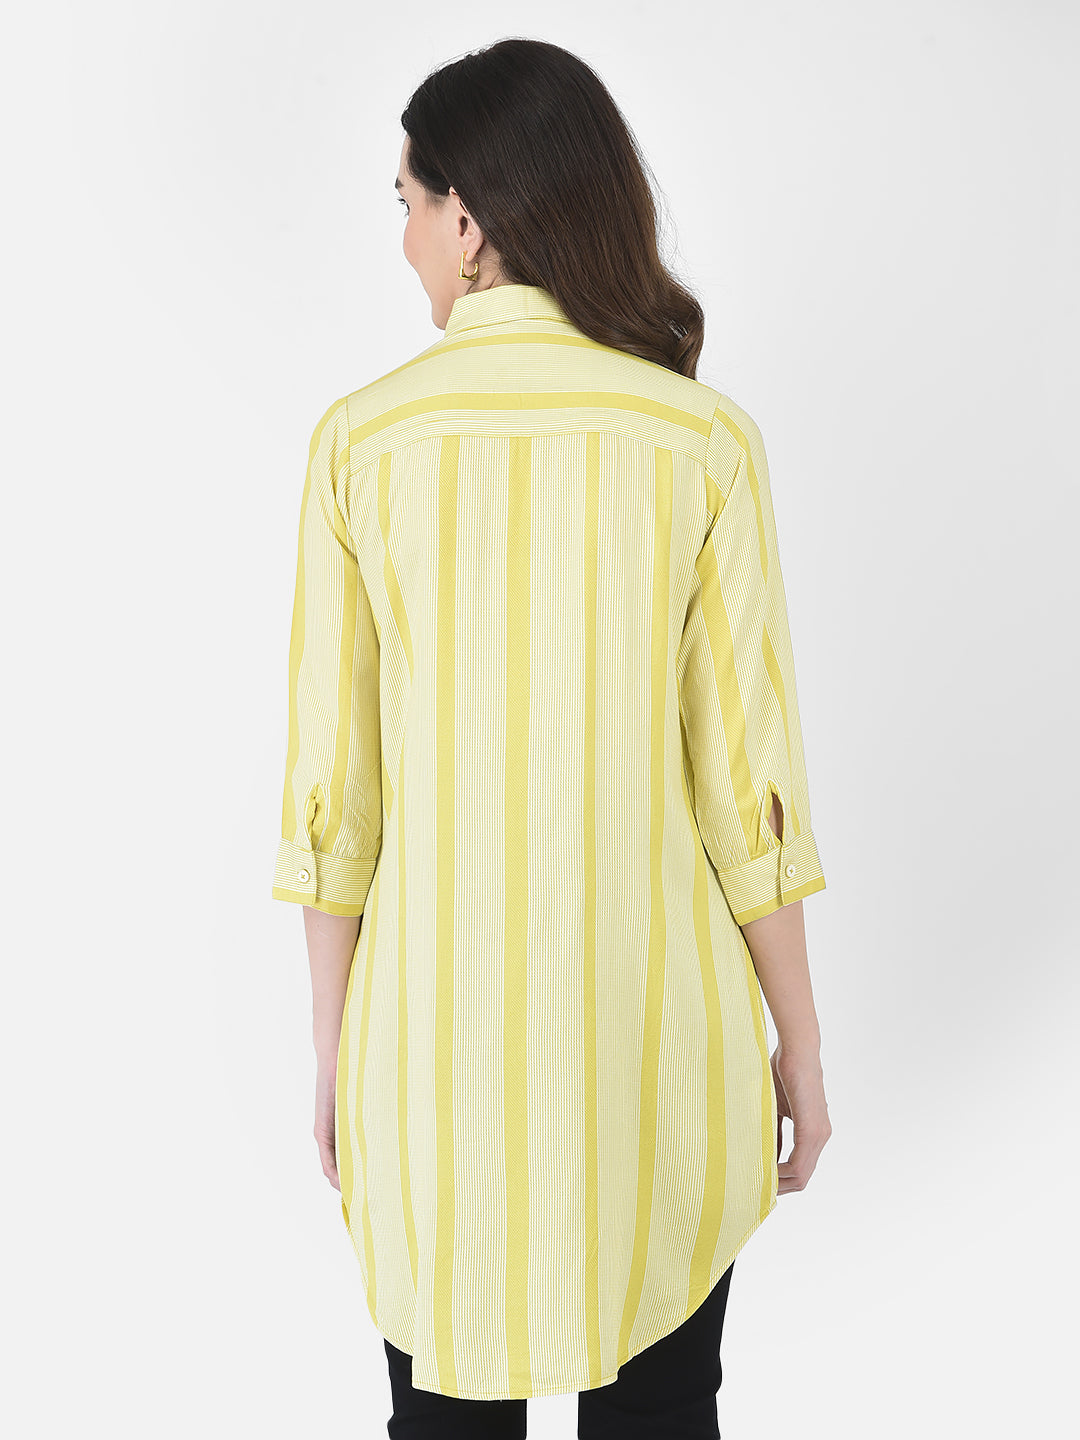 Yellow Striped Longline Shirt - Women Shirts